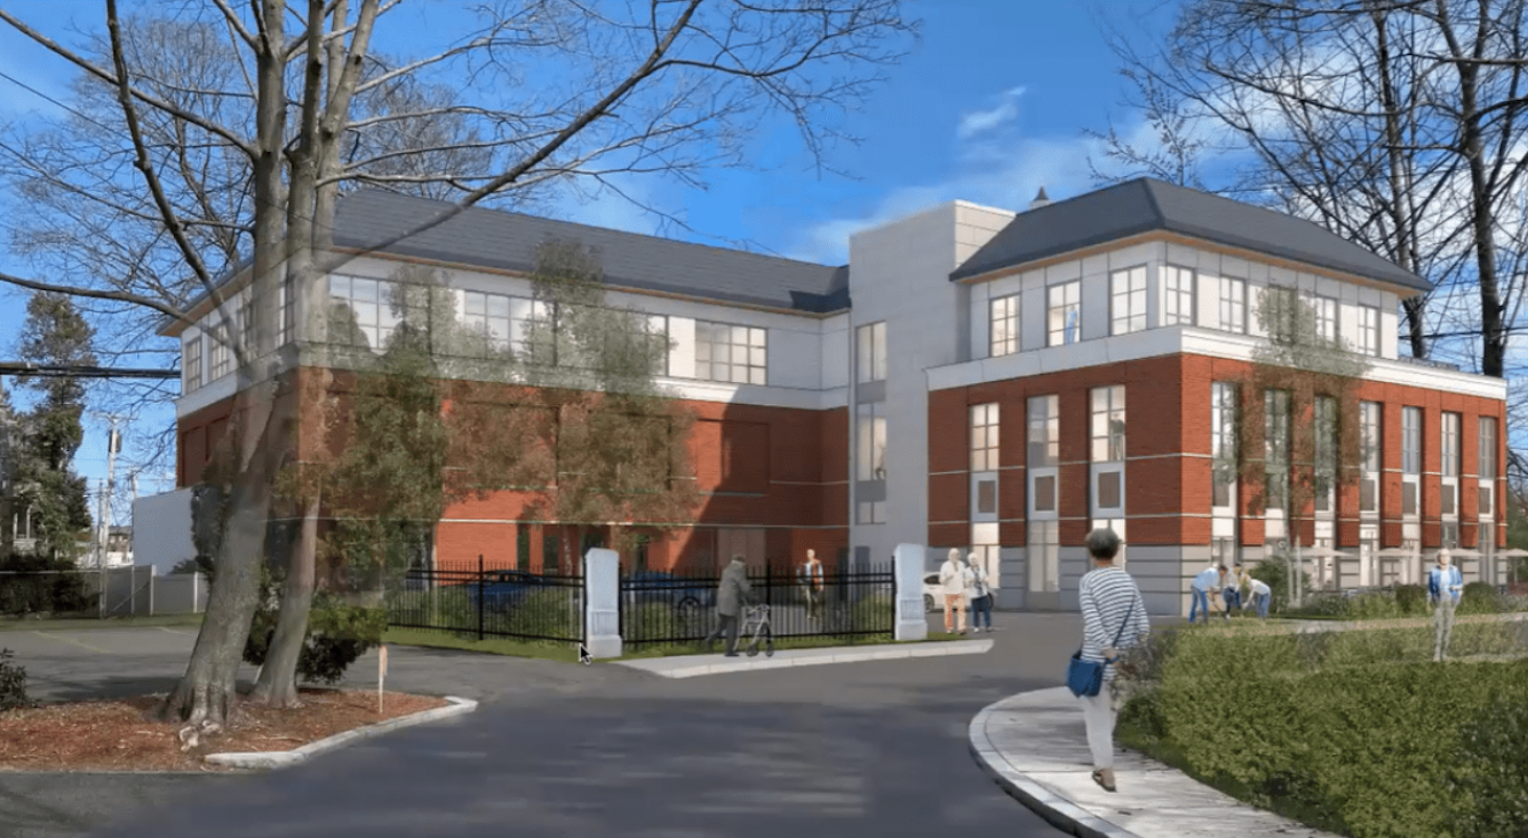 Architect Details NewCAL Designs Following Vote Not to Landmark Current Senior Center